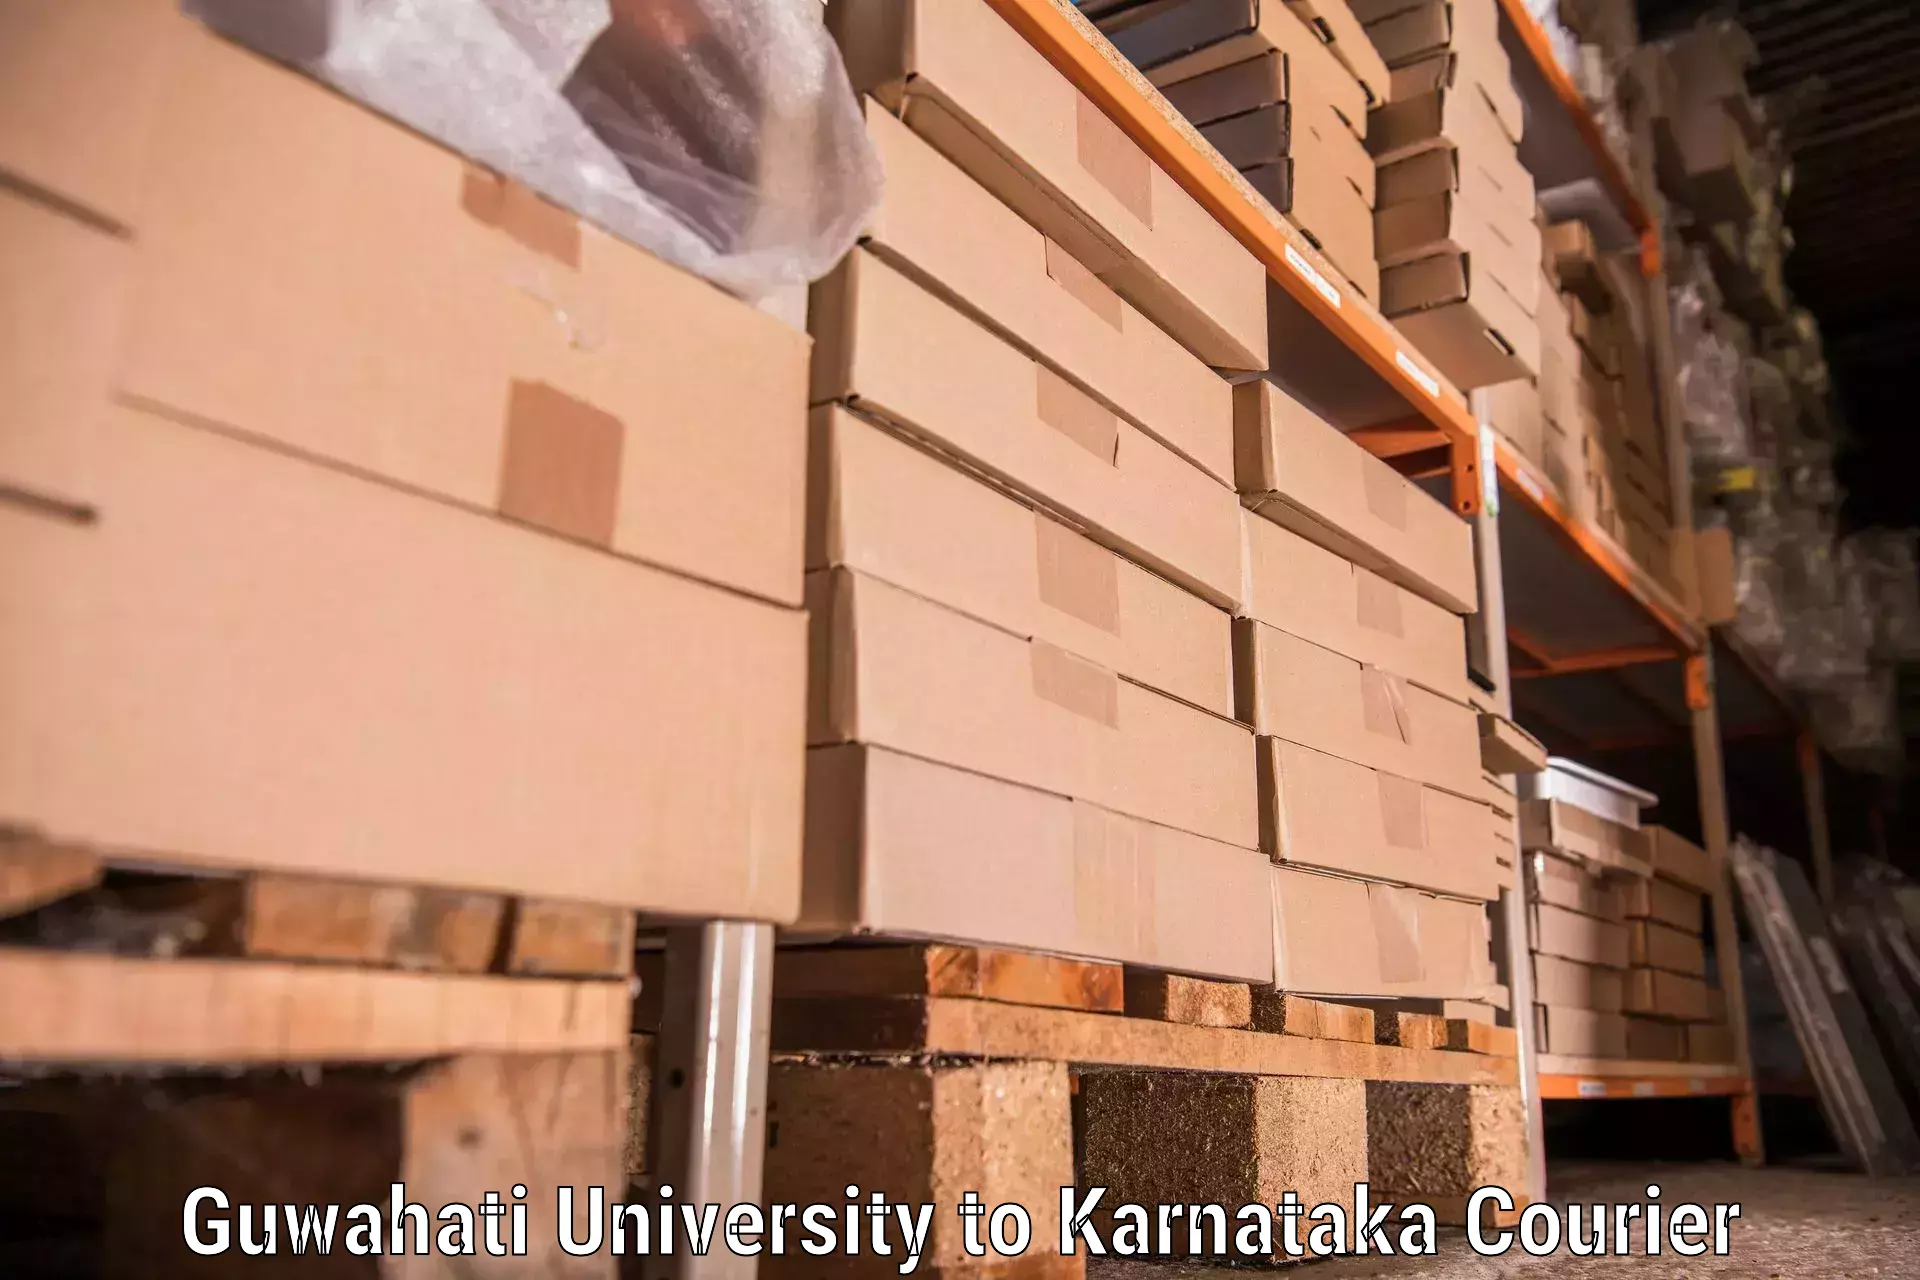 Furniture relocation services Guwahati University to Mangalore Port